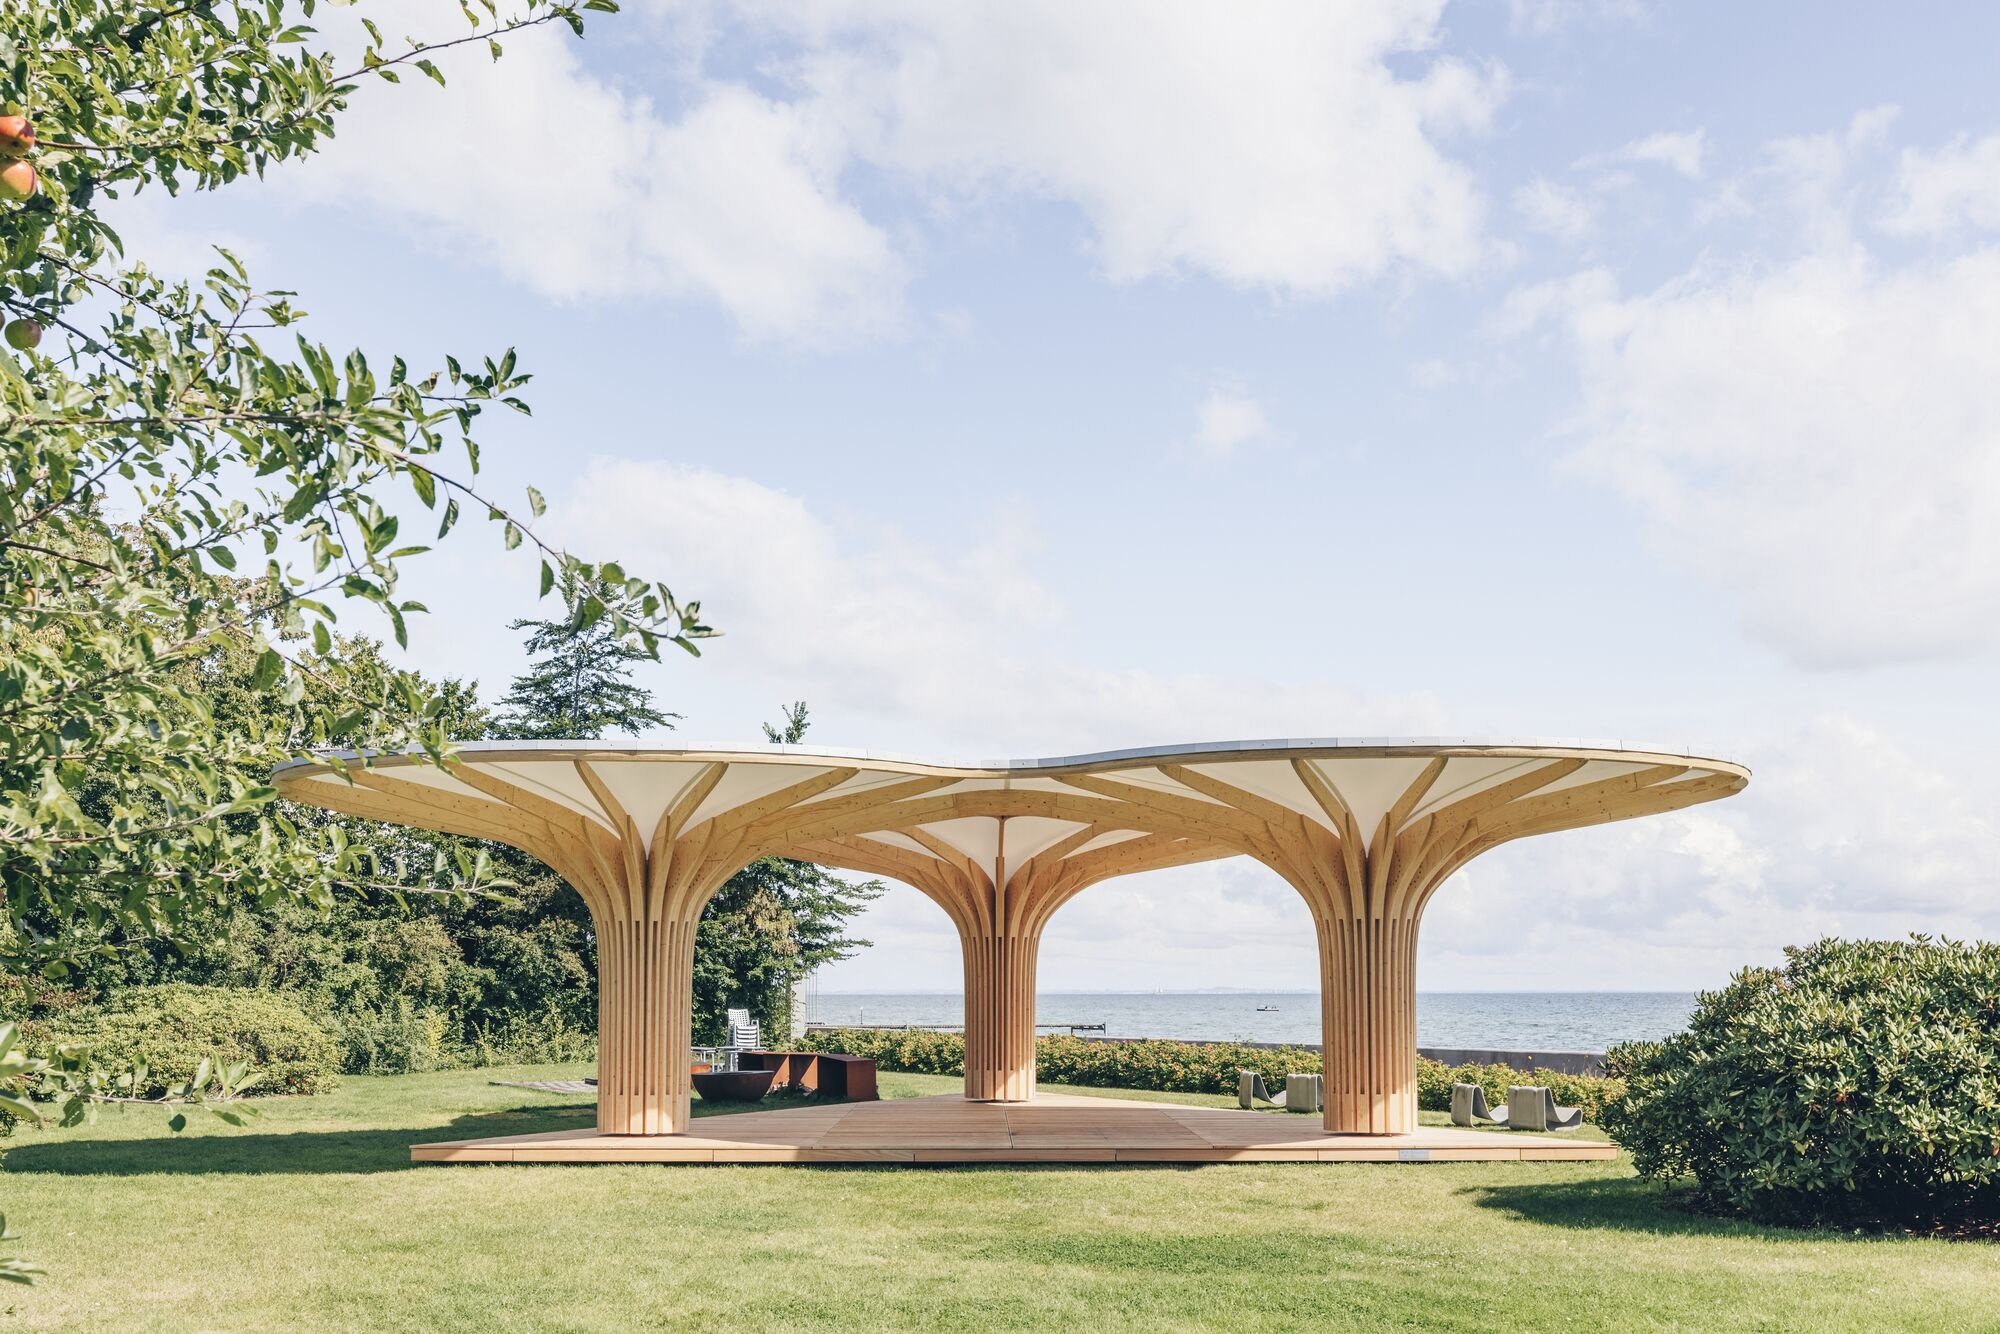 3 holzstrukturen mit membrandach bilden den pavillon „into the woods“